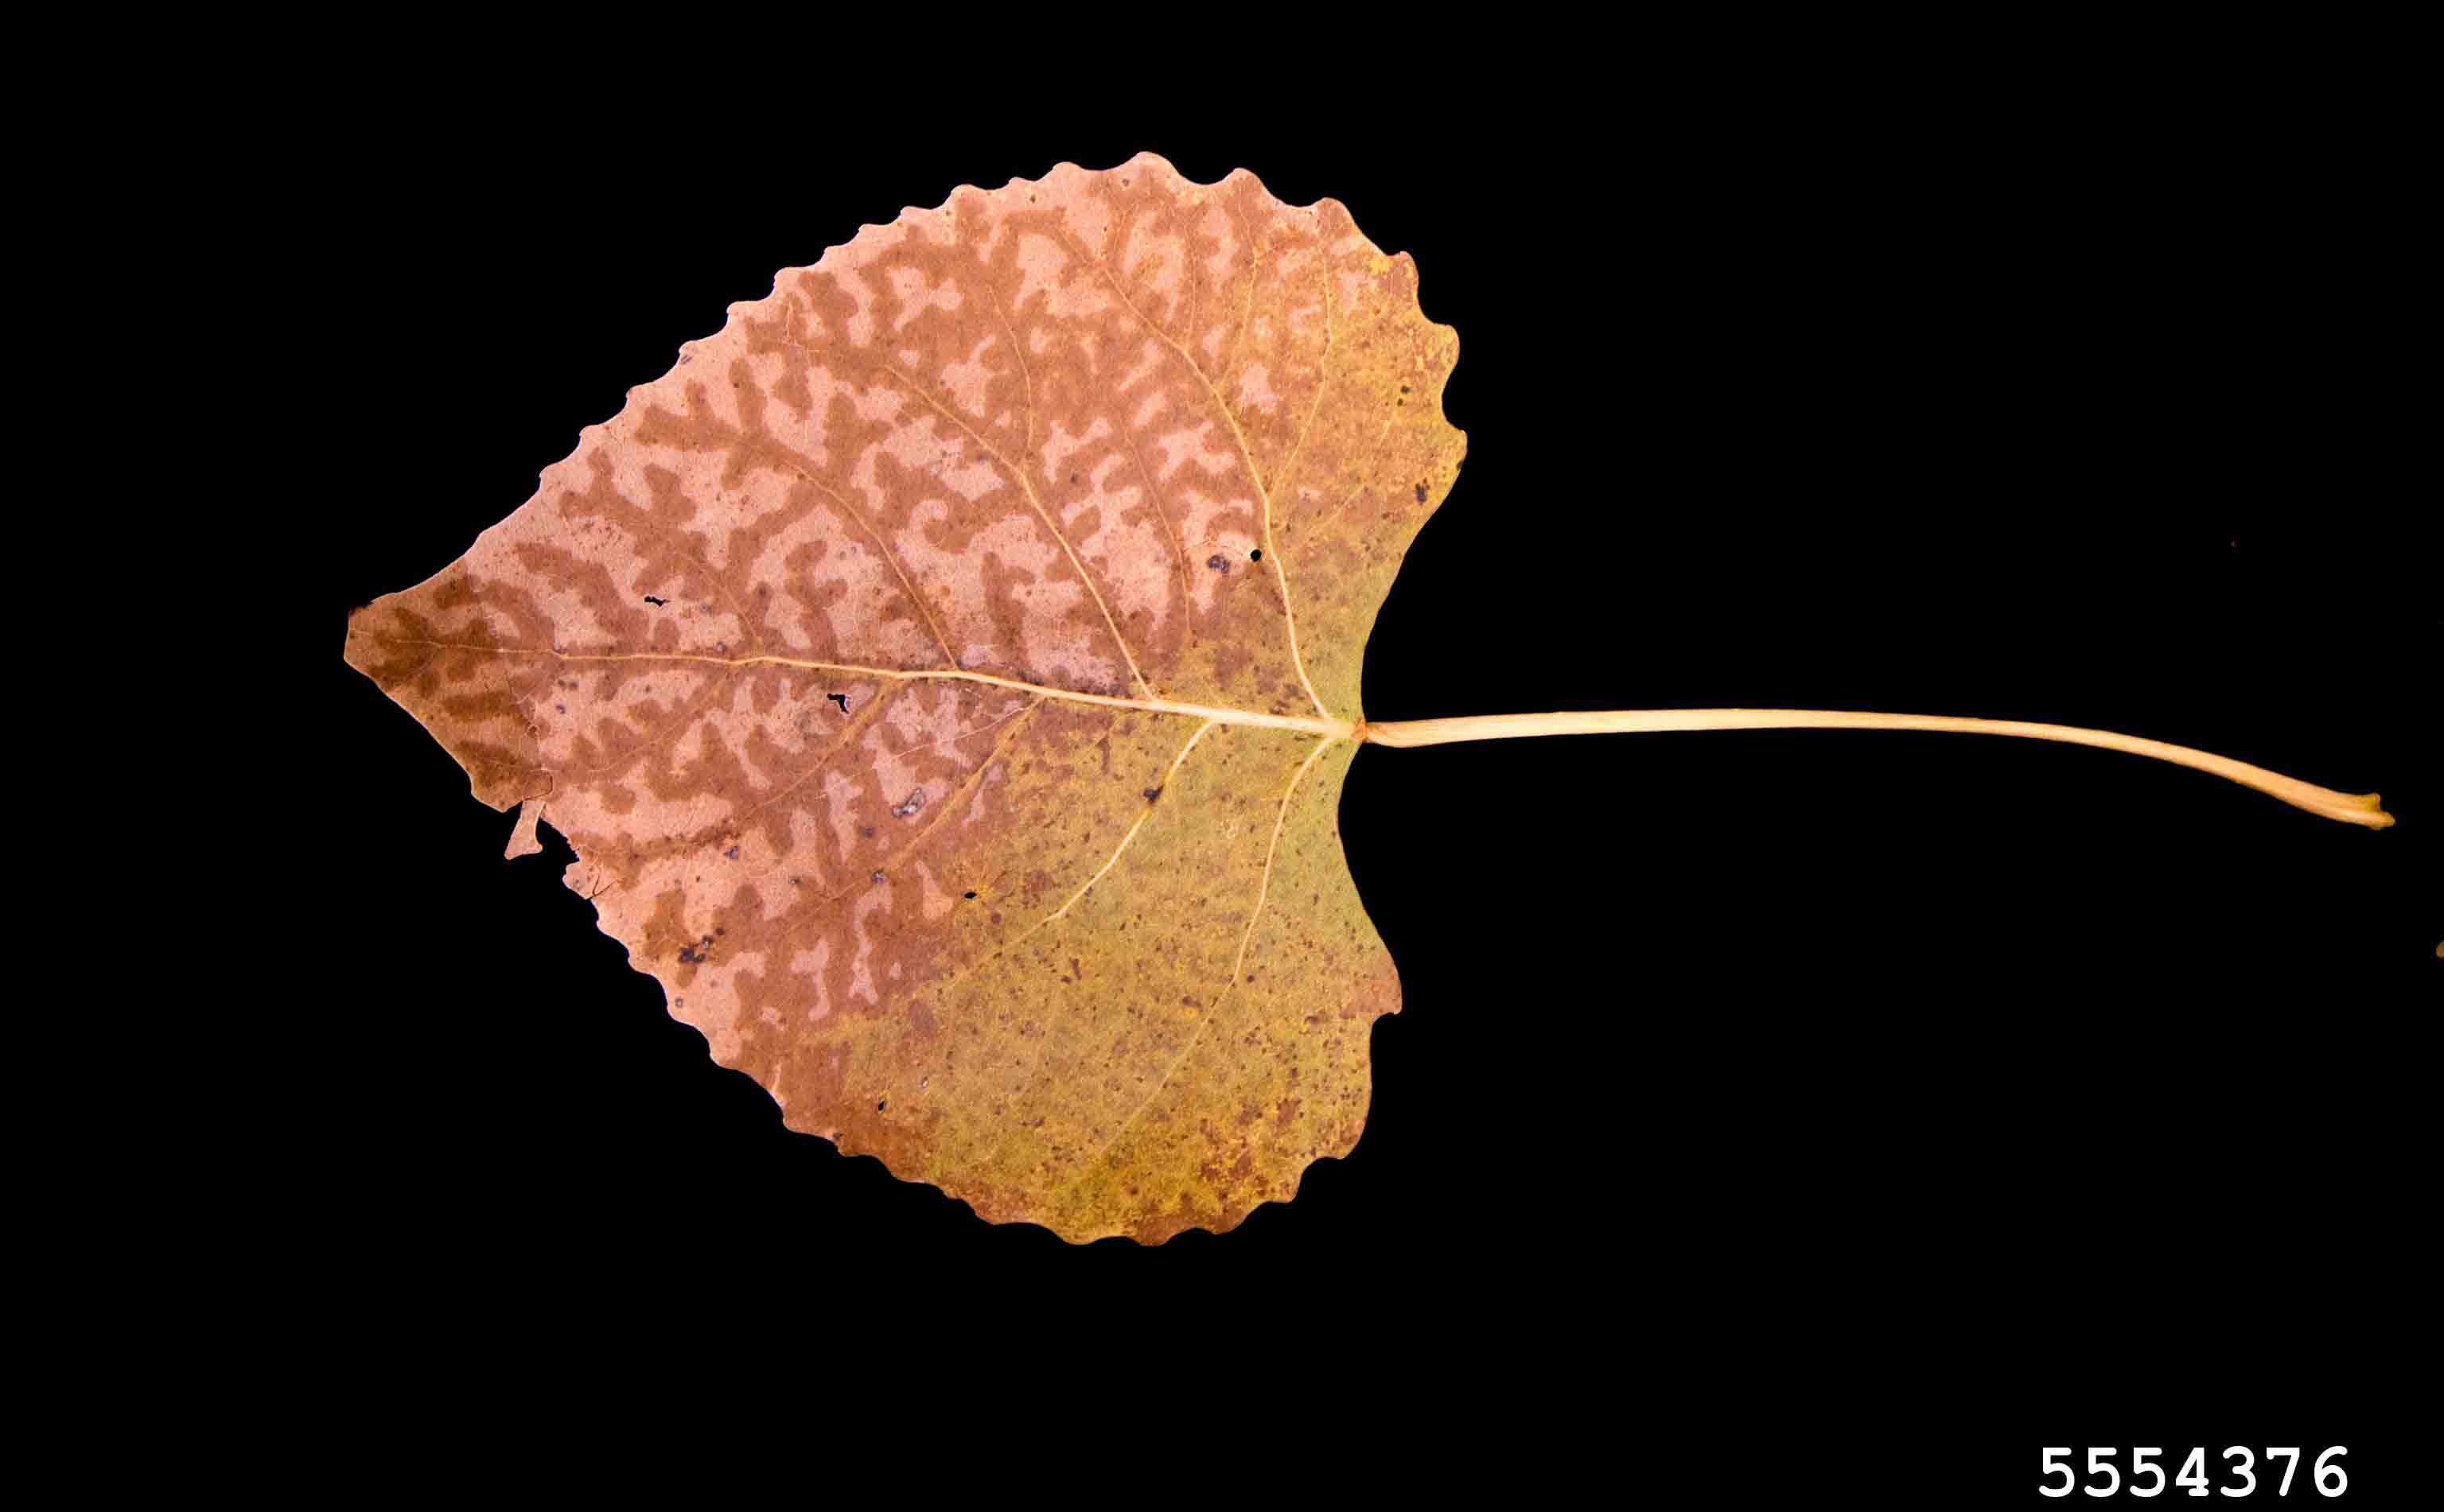 Eastern cottonwood leaf, showing coarse teeth on the margins